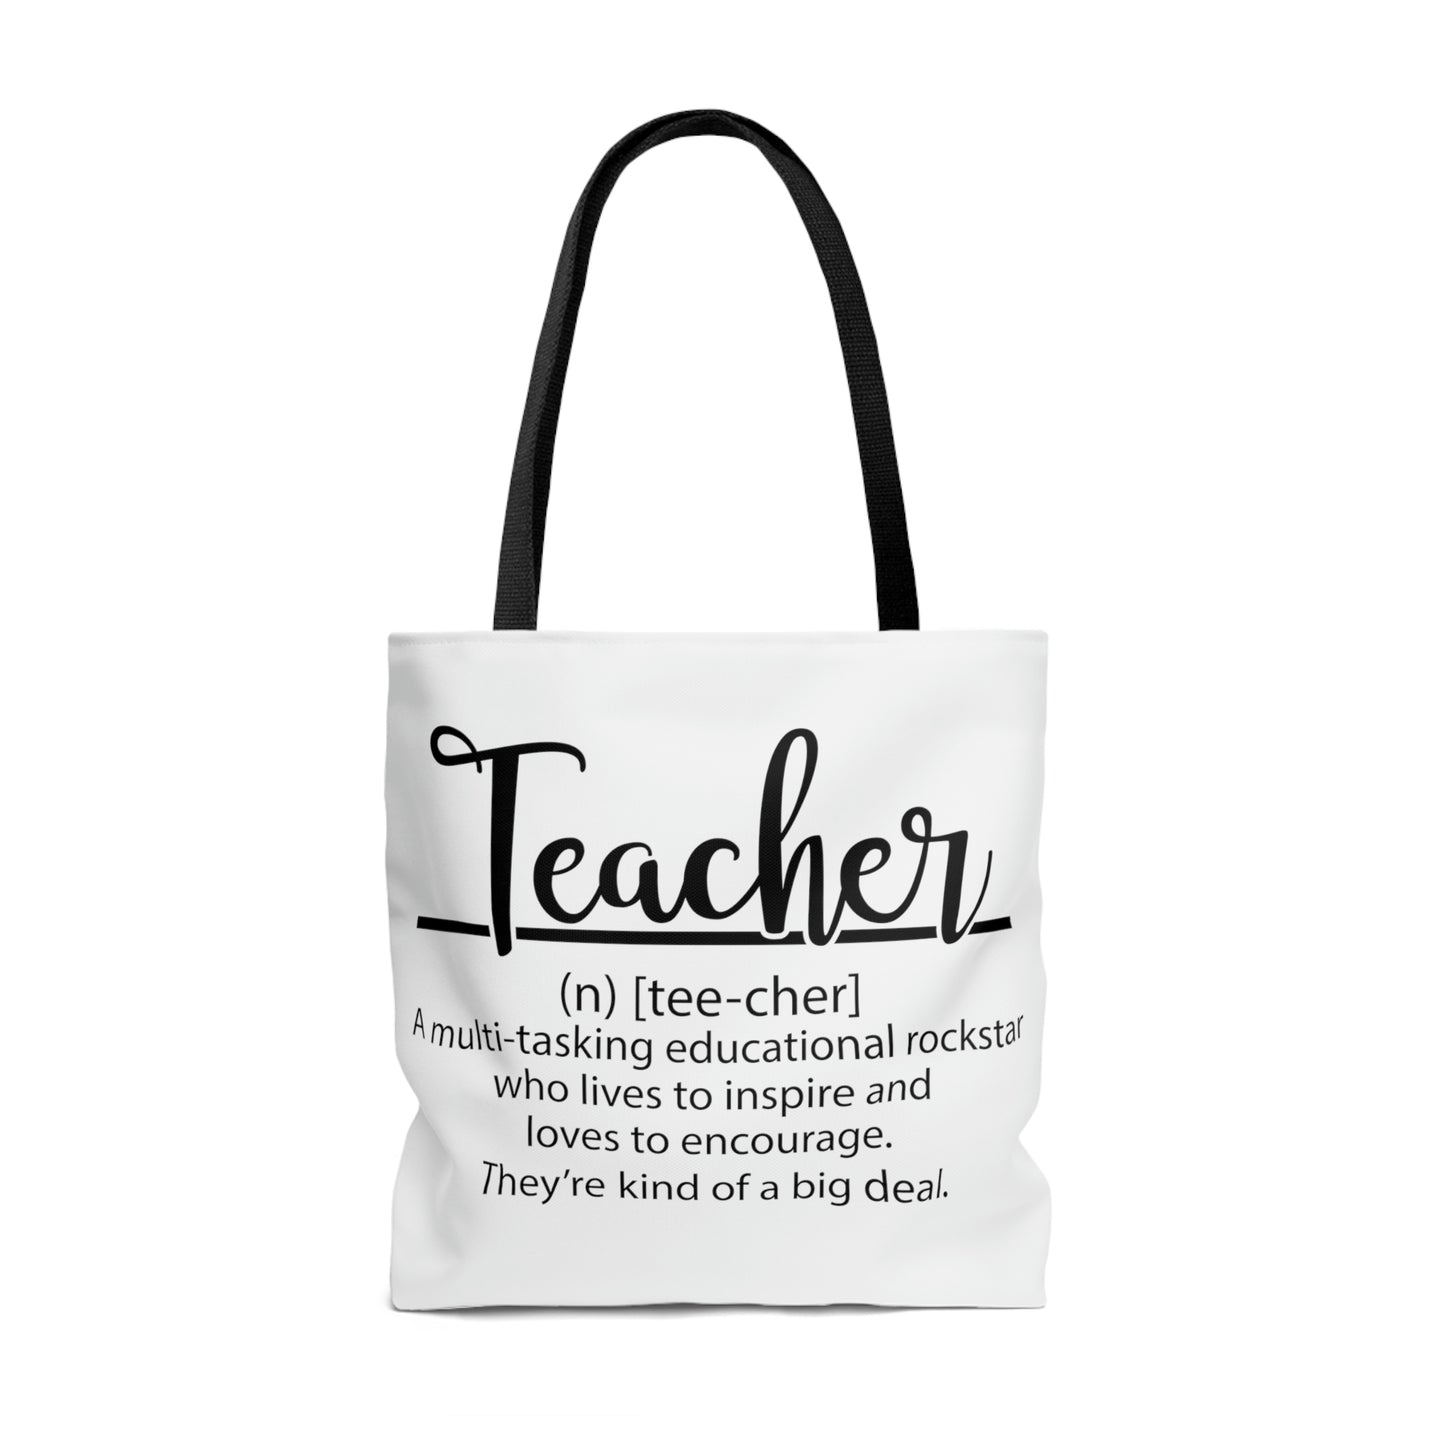 Teacher Facts Tote Bag